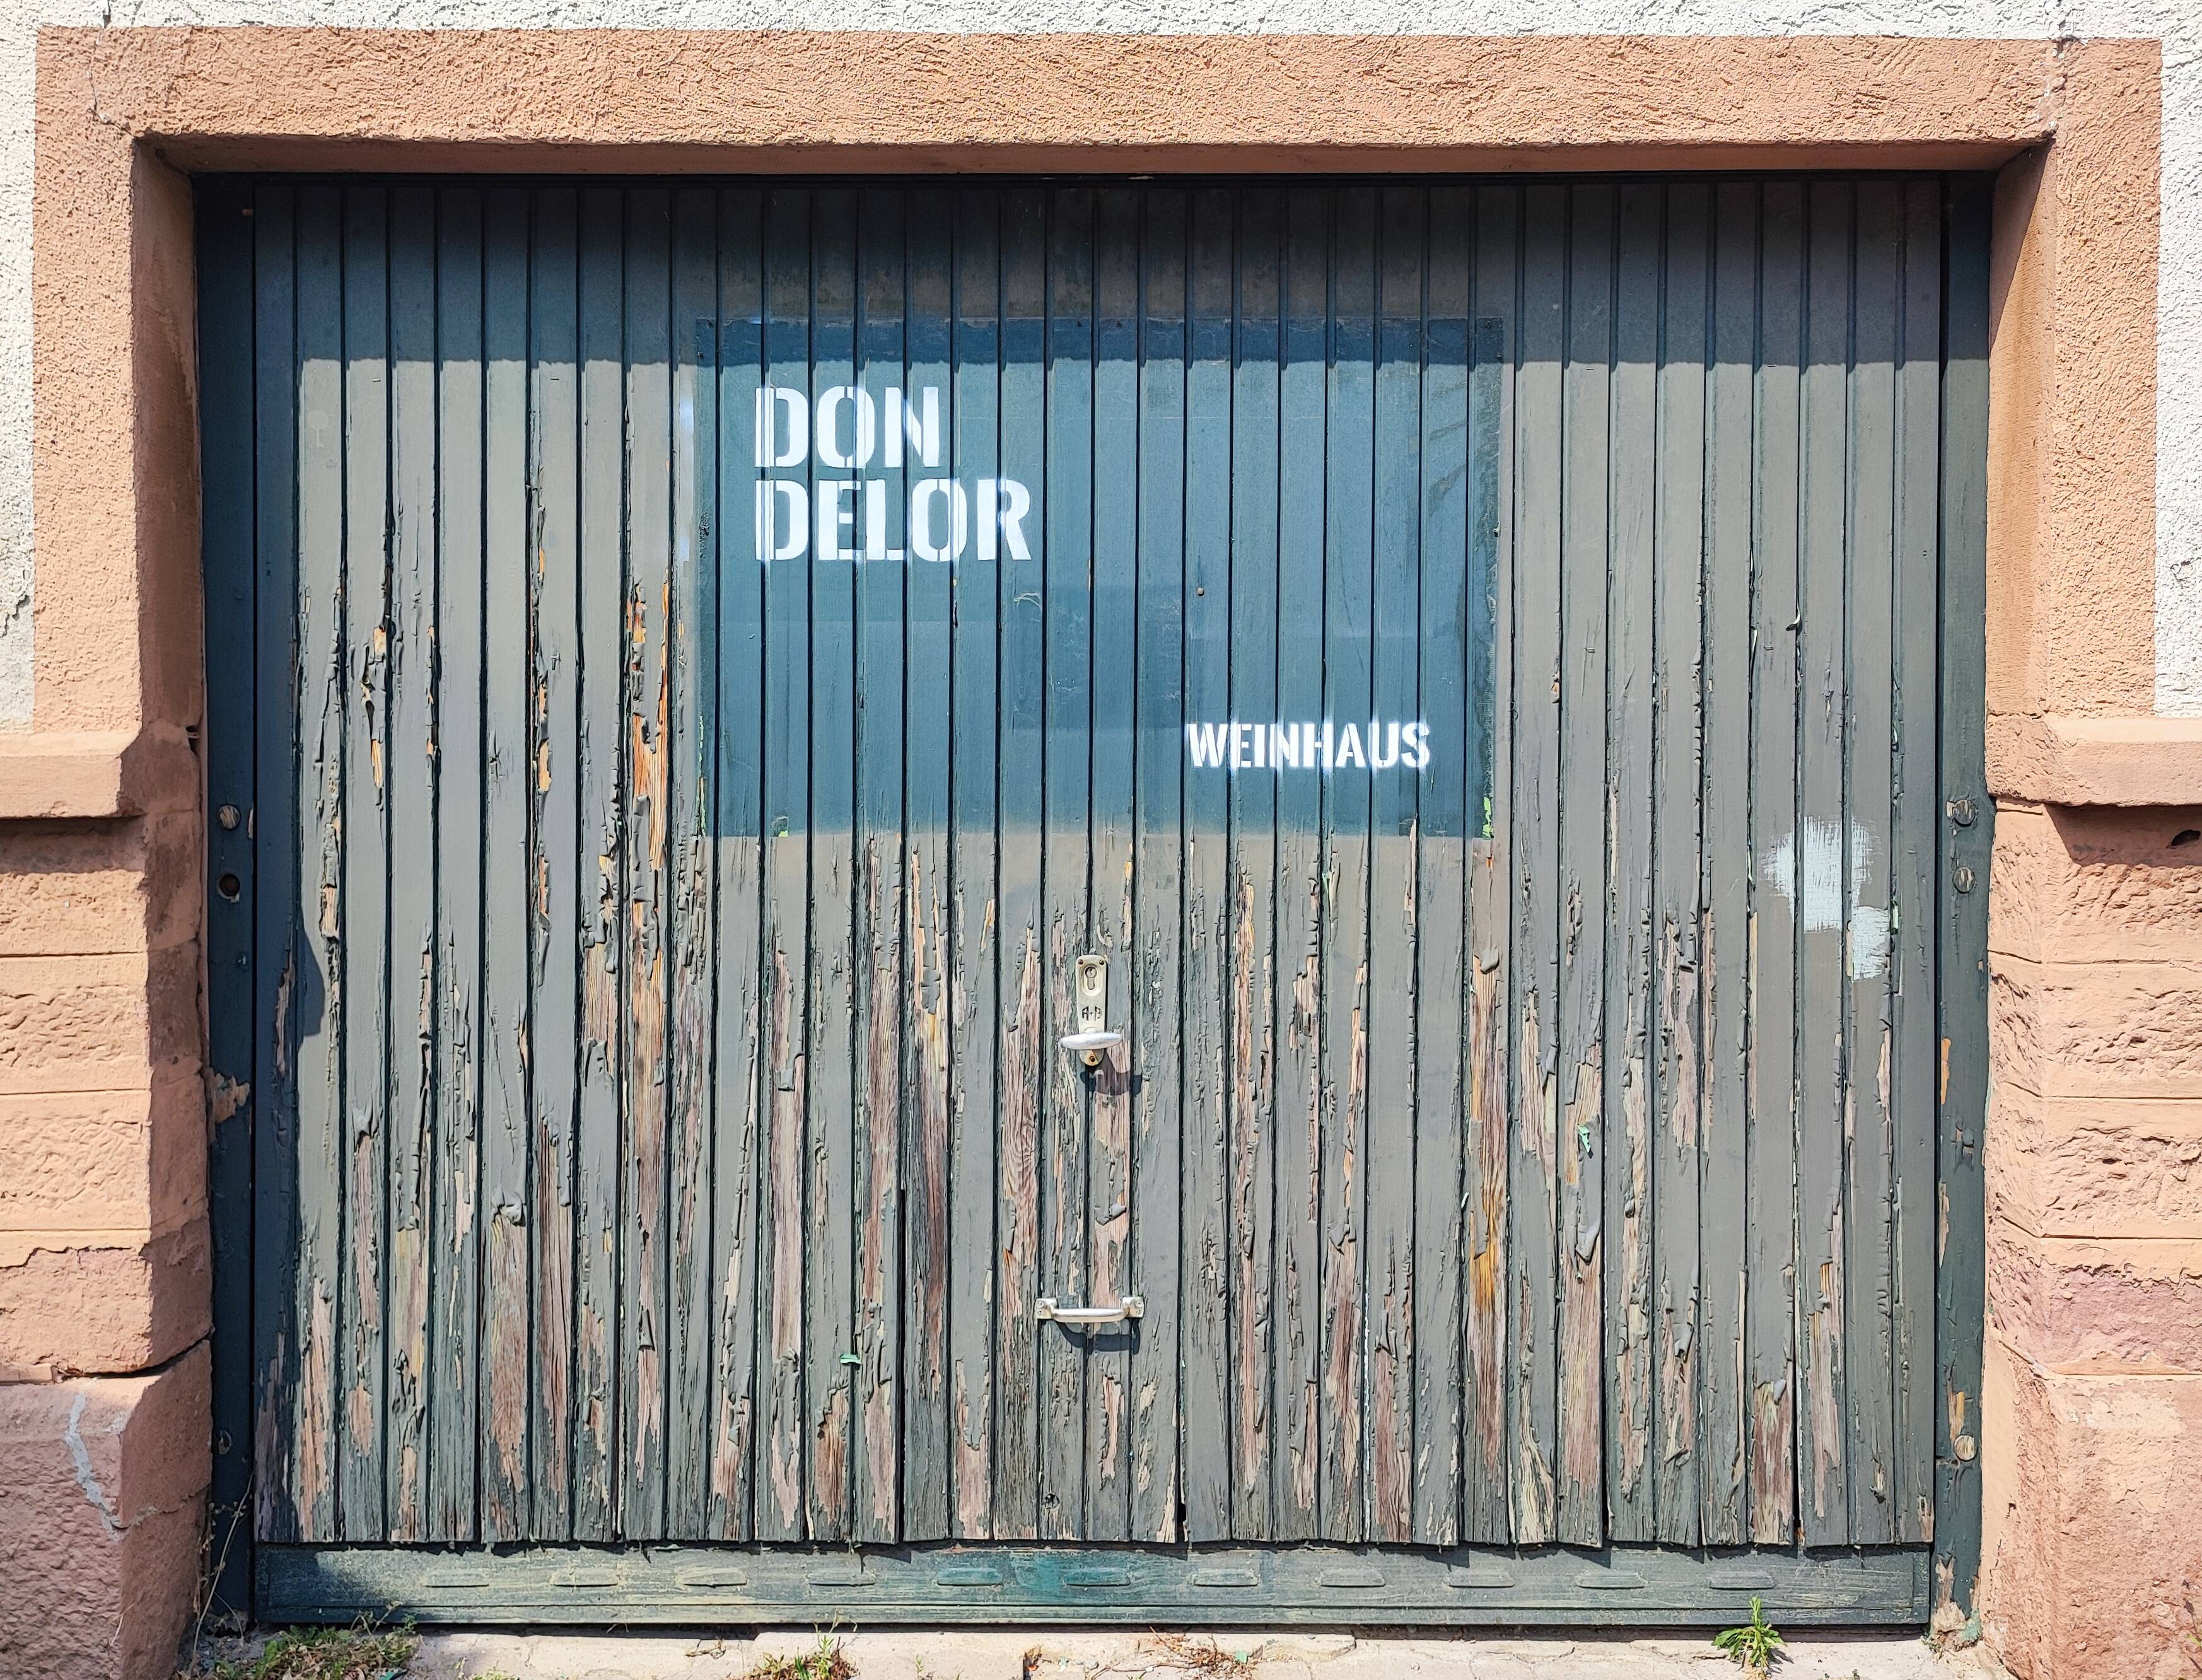 Weinhaus Delor